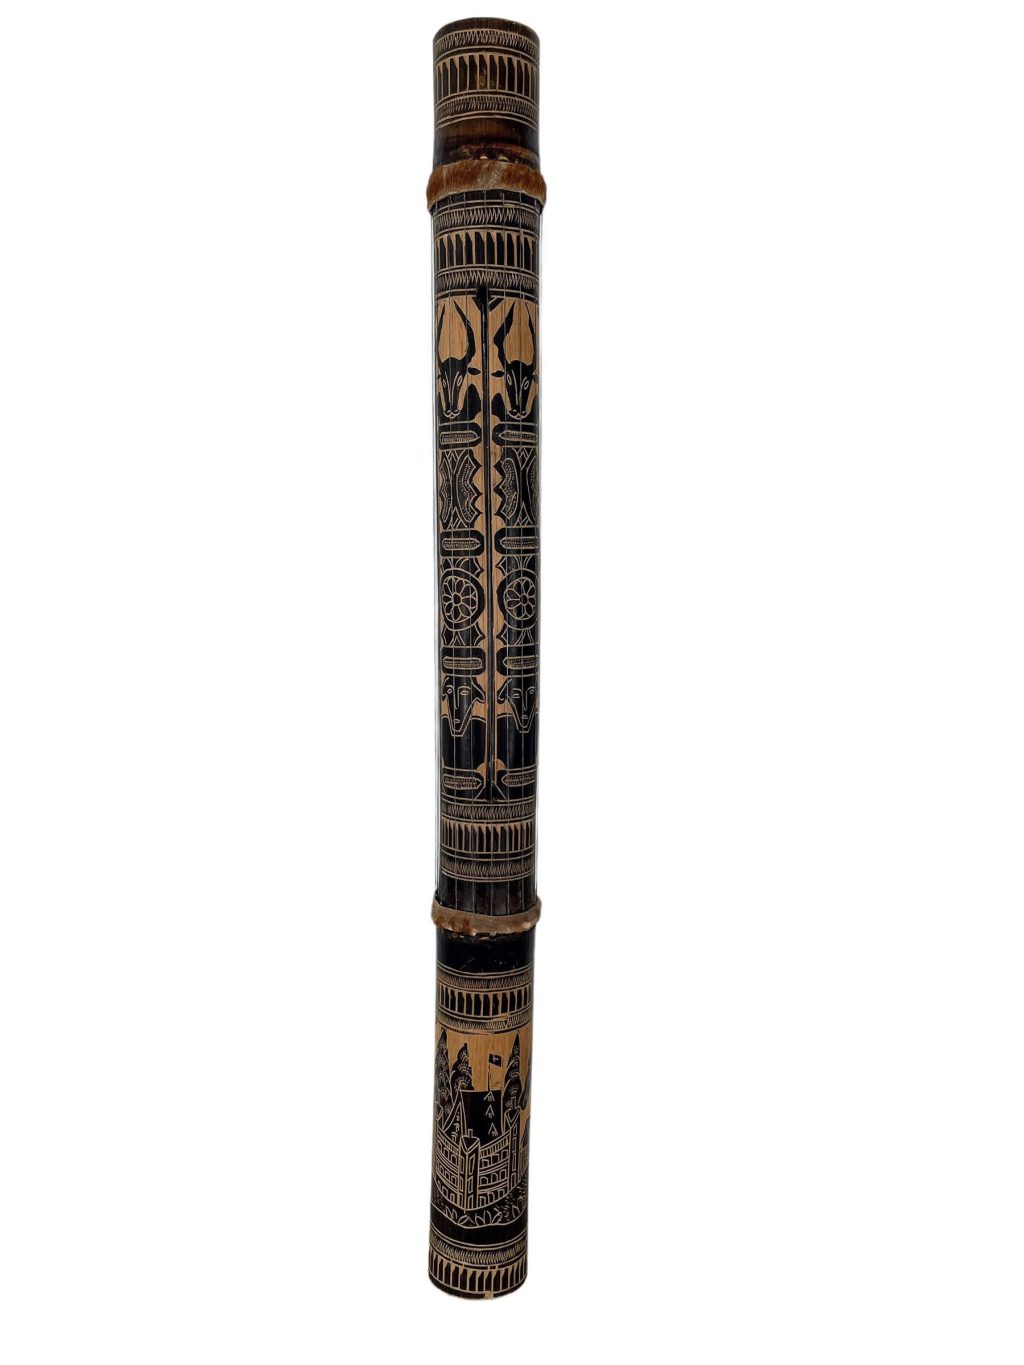 Vintage African Bamboo Stringed Musical Instrument Wooden Hide Skin Metal Decor Carved Carving Sculpture Tribal Art c1980-90’s